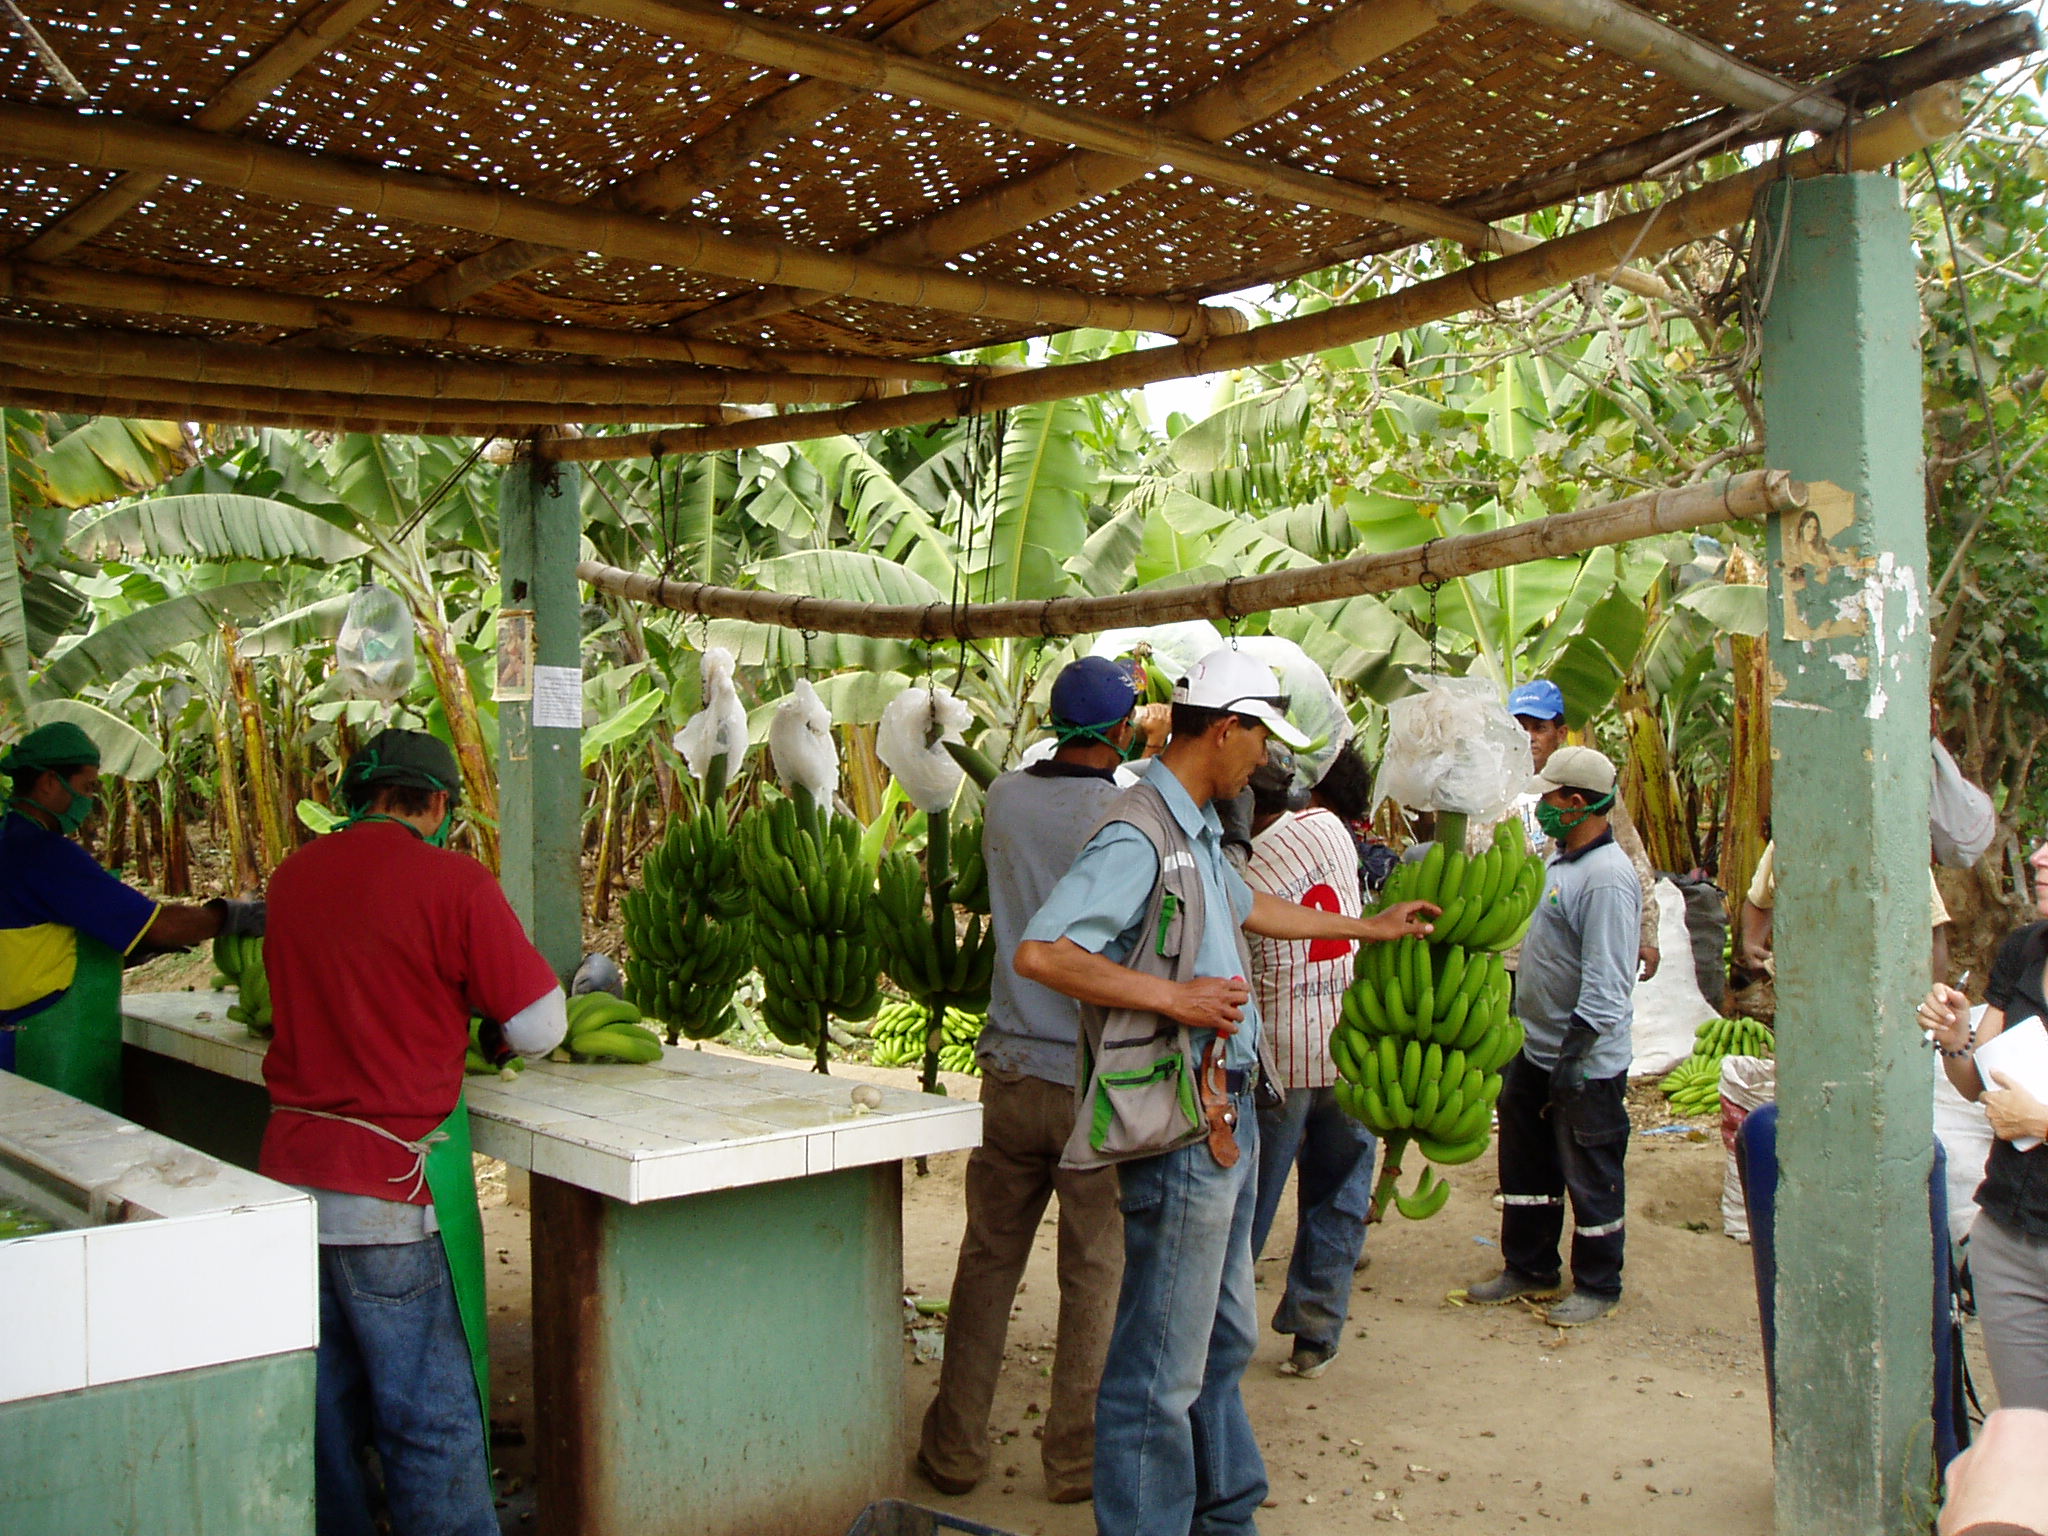 Fair Trade Equal Exchange Bananas at Valley Natural Foods